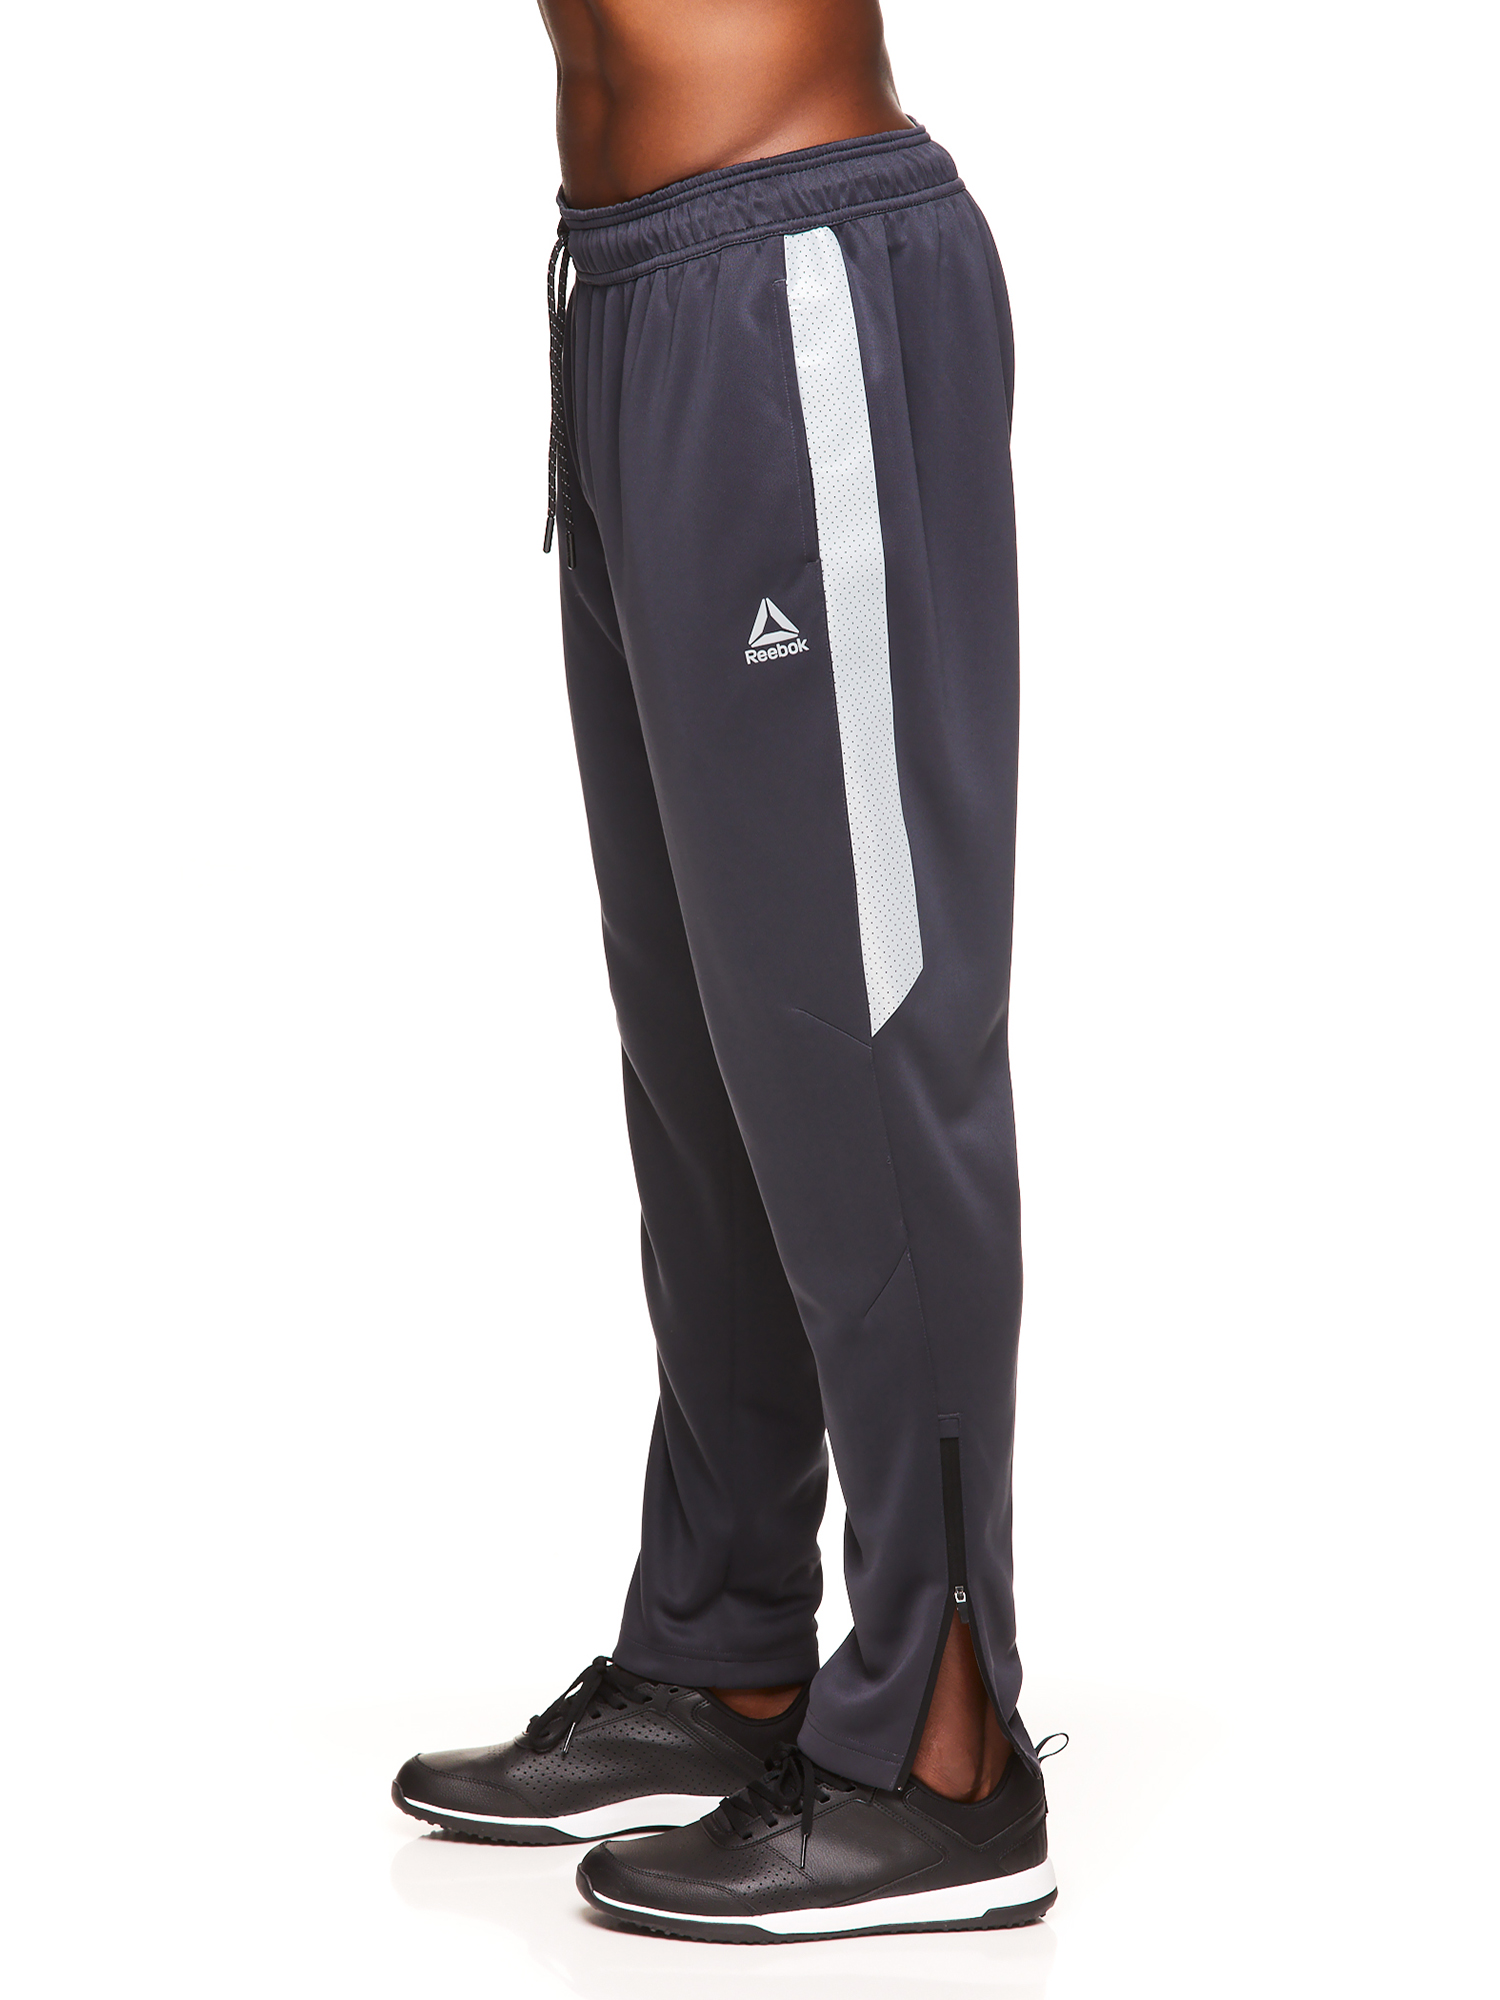 Reebok Men's and Big Men's Active Interlock Pants, up to Size 3XL - image 4 of 4